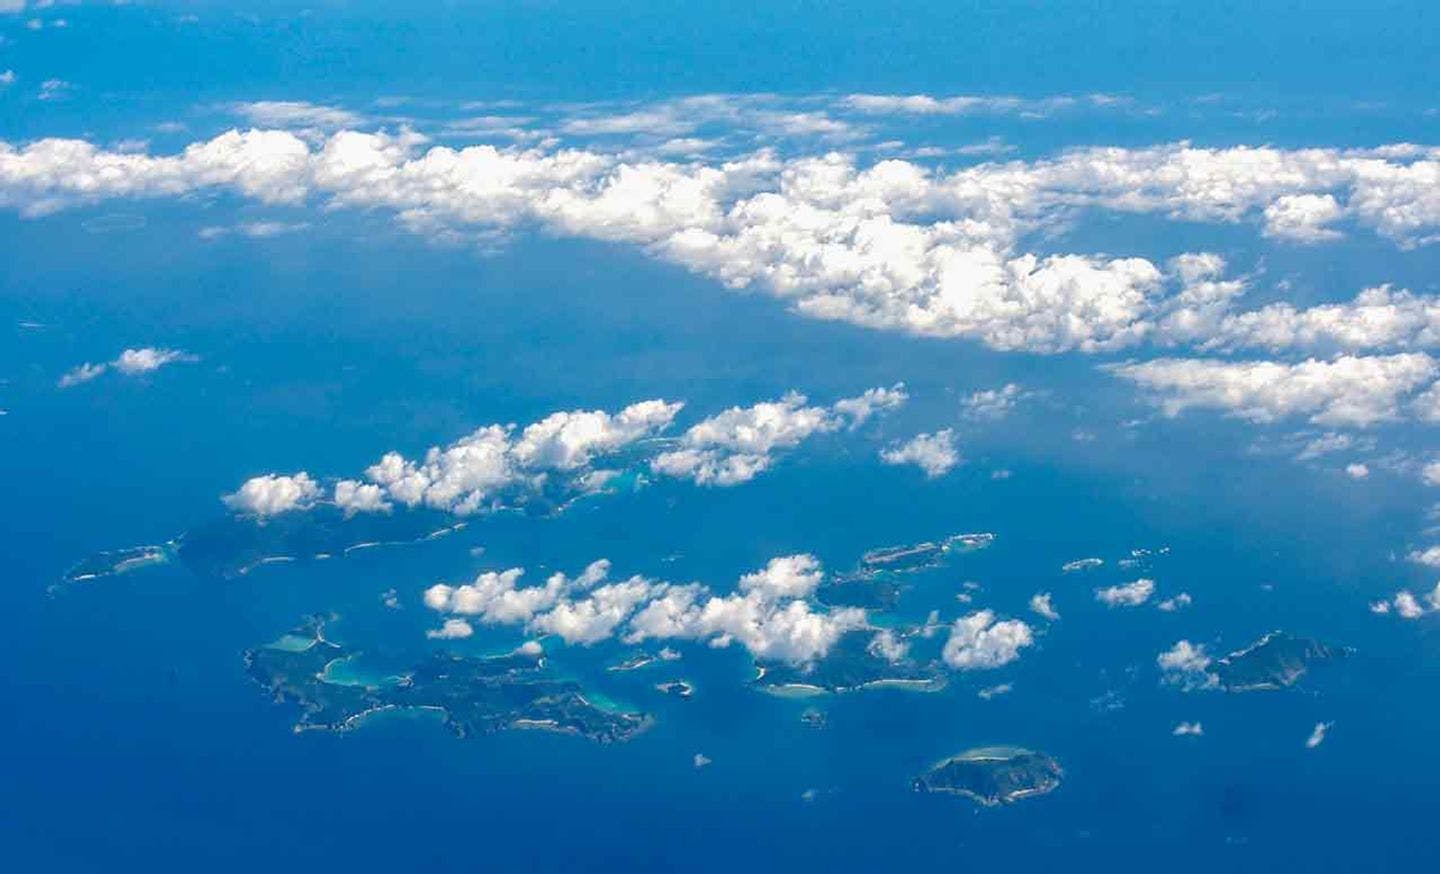 The Kerama archipelago. Photo: Paipateroma / Wikimedia commons